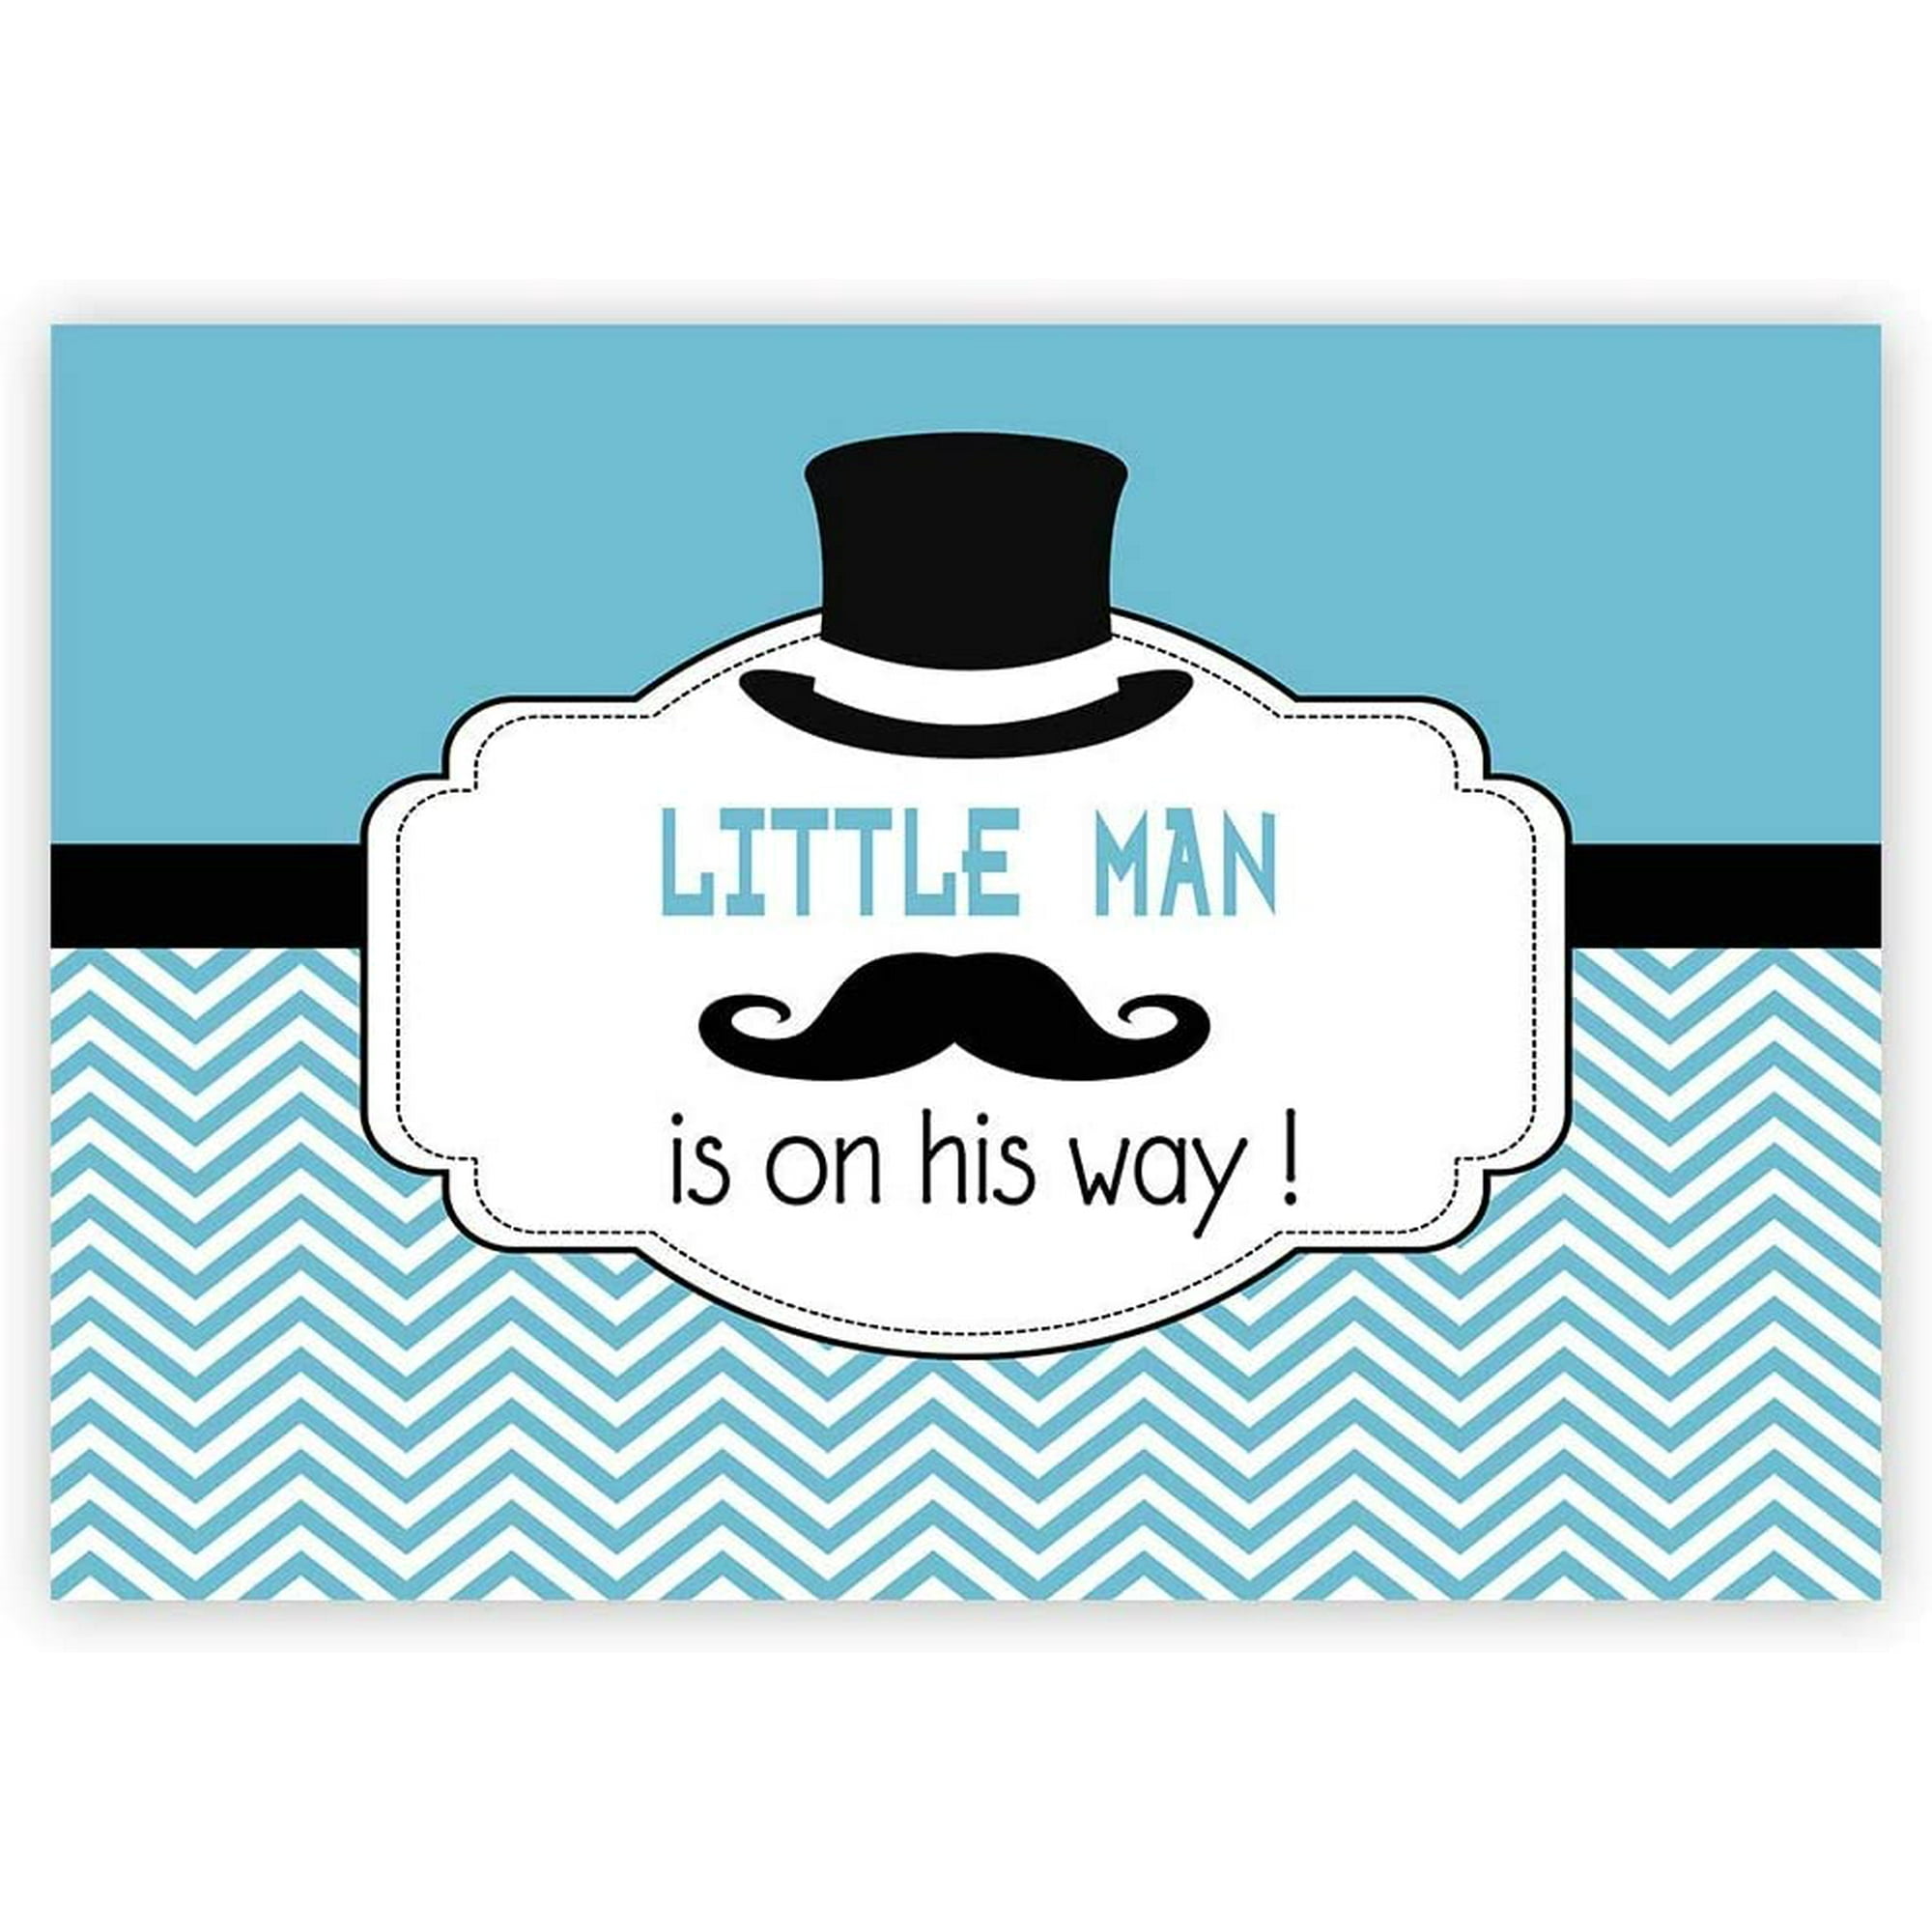 Little man steam фото 107